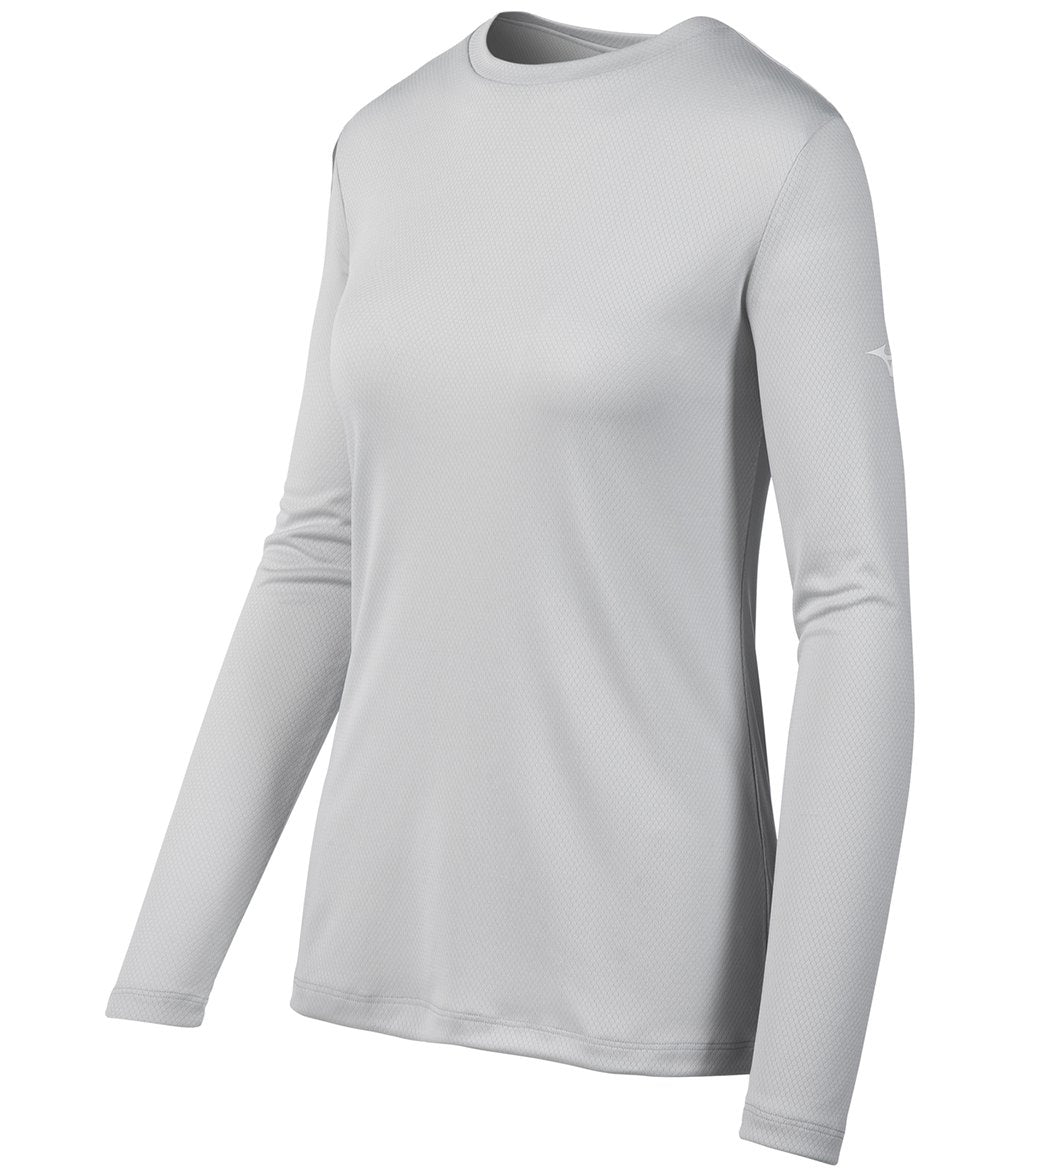 Mizuno Women's Long Sleeve Tee Shirt - Grey Large Polyester - Swimoutlet.com